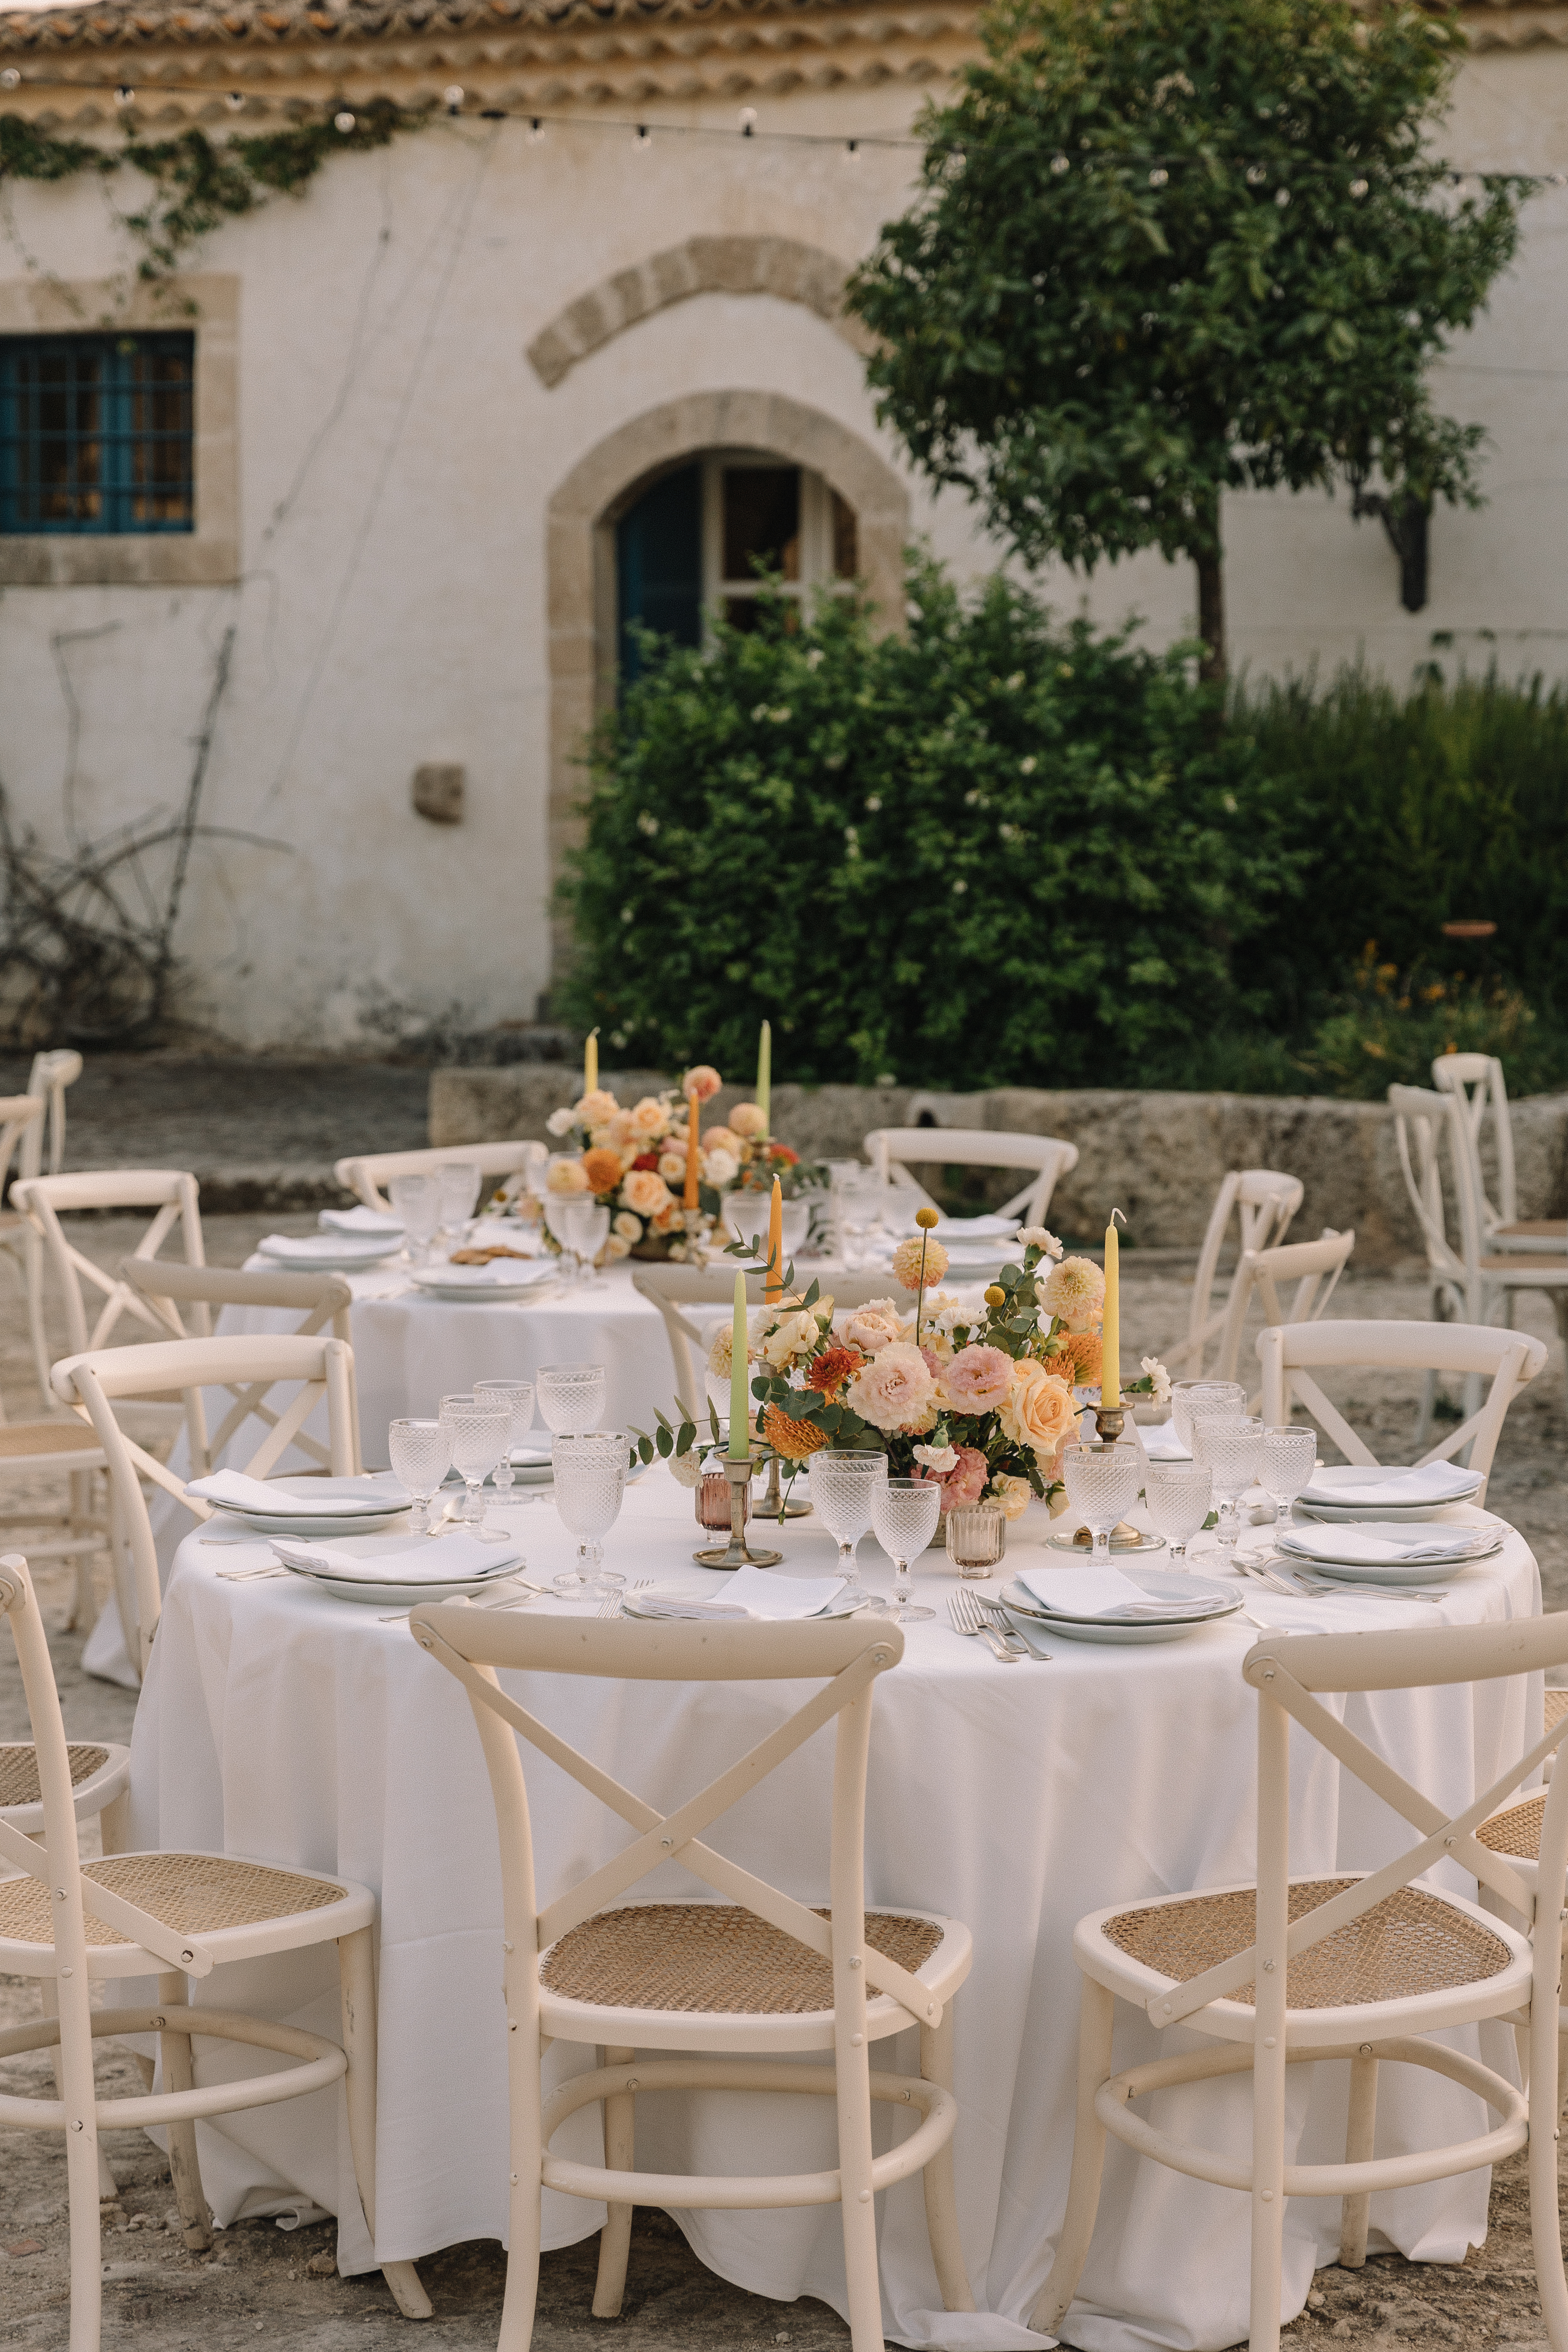 Dinner set up at COMMENDA DI SAN CALOGERO, Wedding Venue in Sicily // Photo Credit Rosita Lipari Wedding